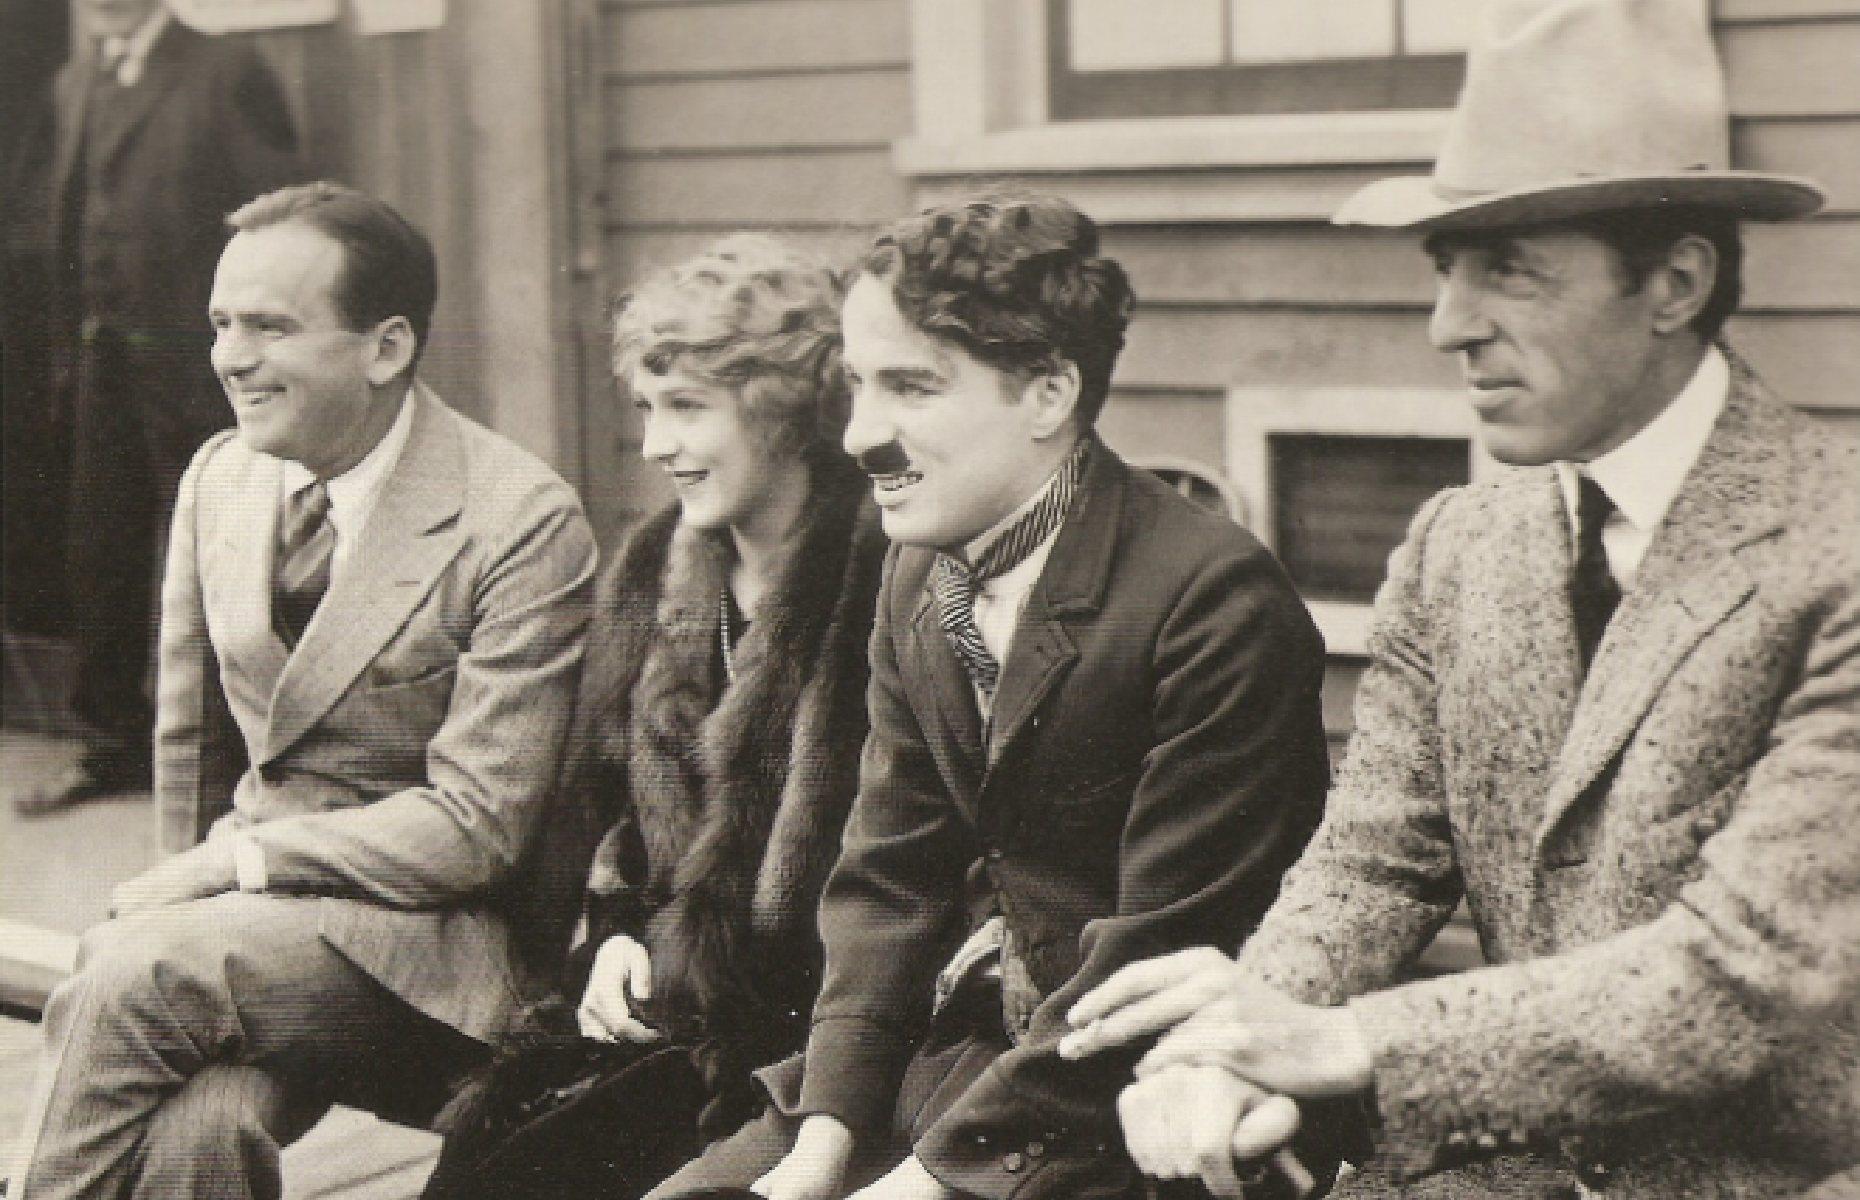 Working with Charlie Chaplin